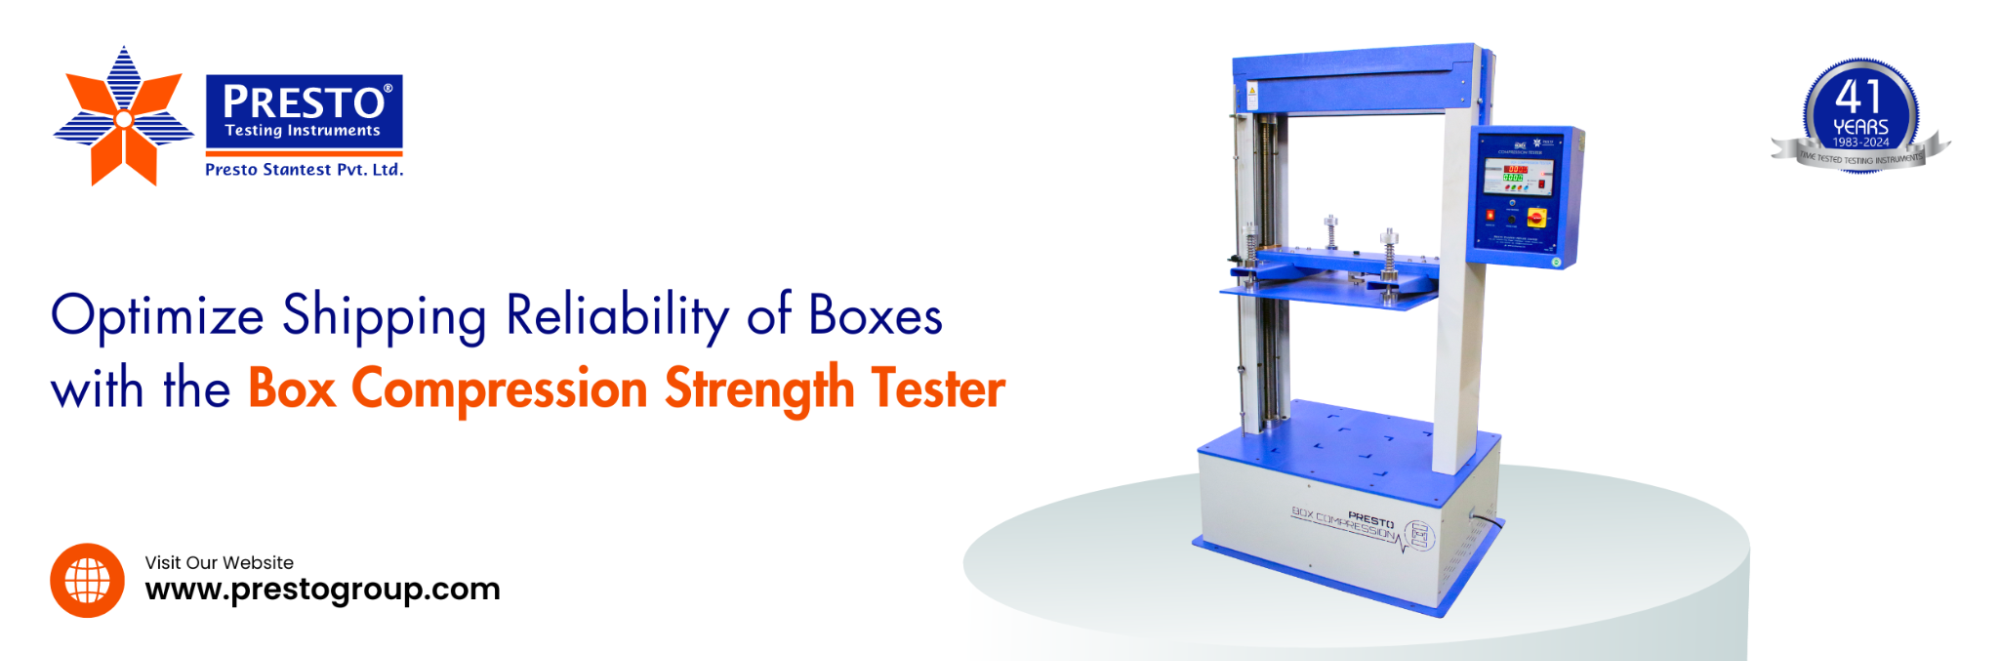 Box Compression Strength Tester